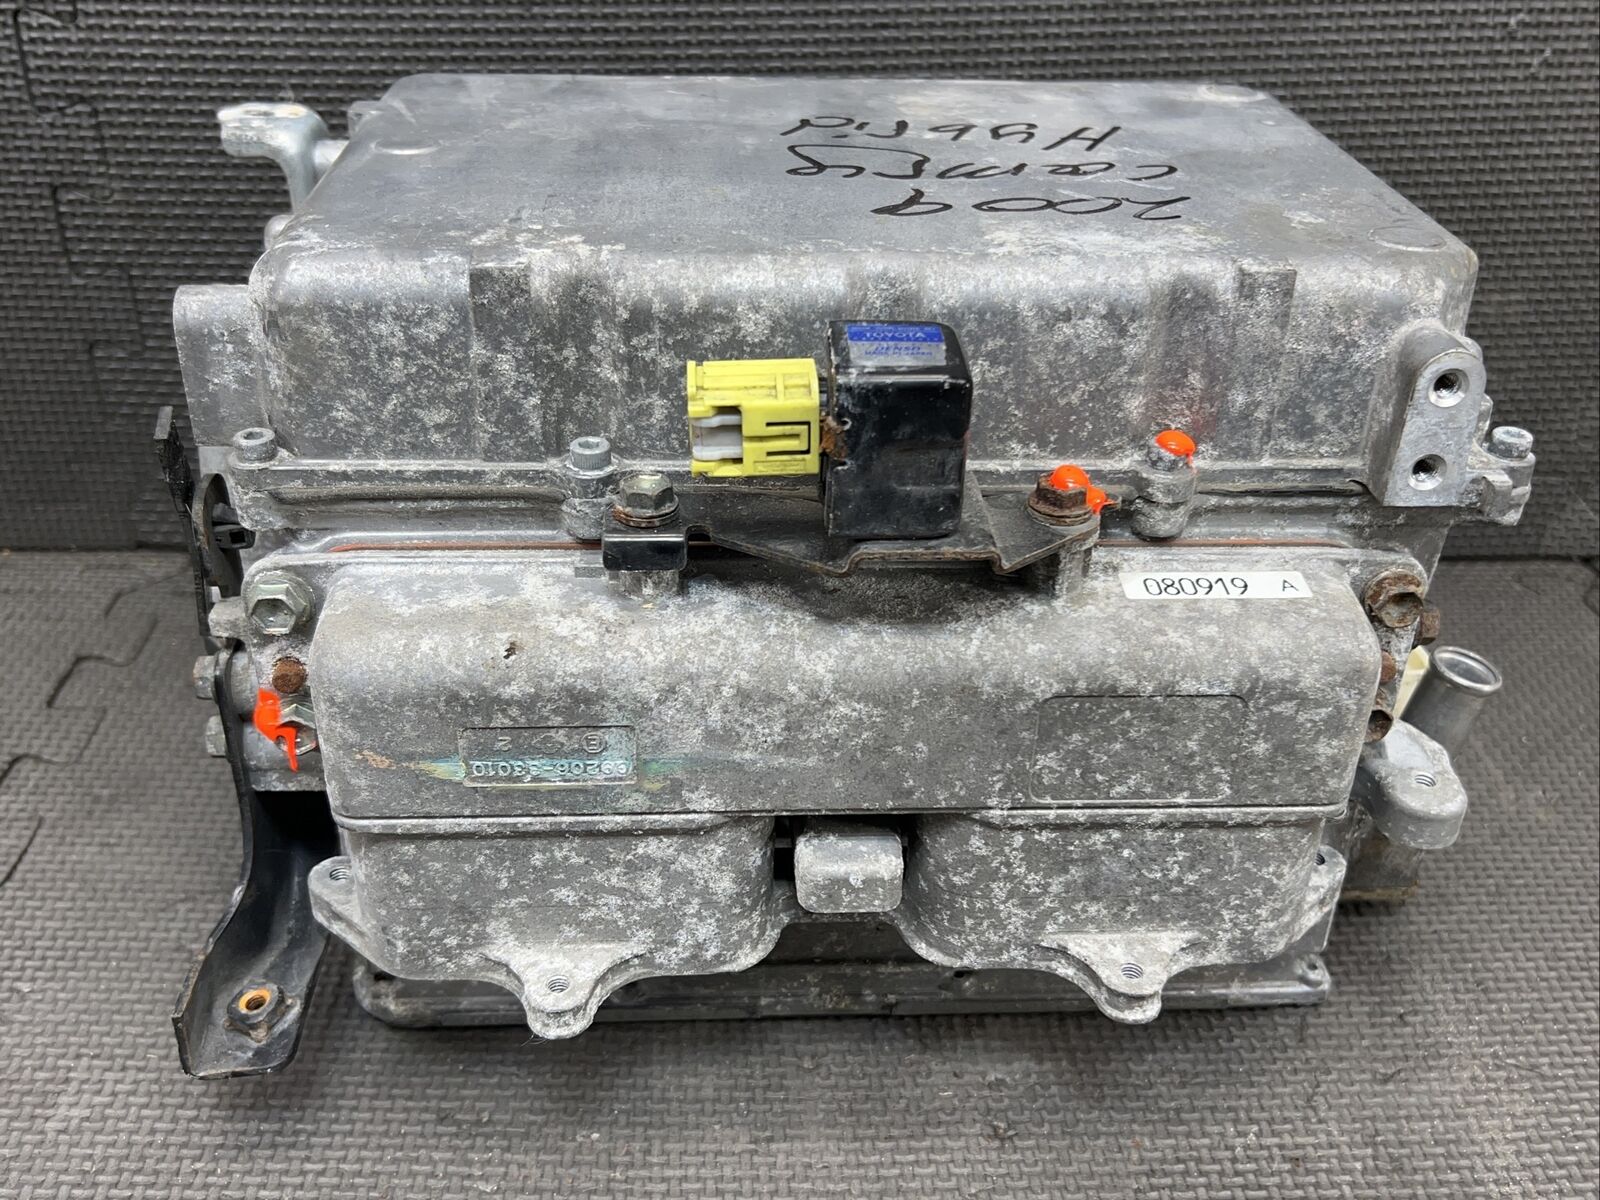 🌟 2009 Toyota Camry Hybrid Dc Inverter Converter Charger Power Battery